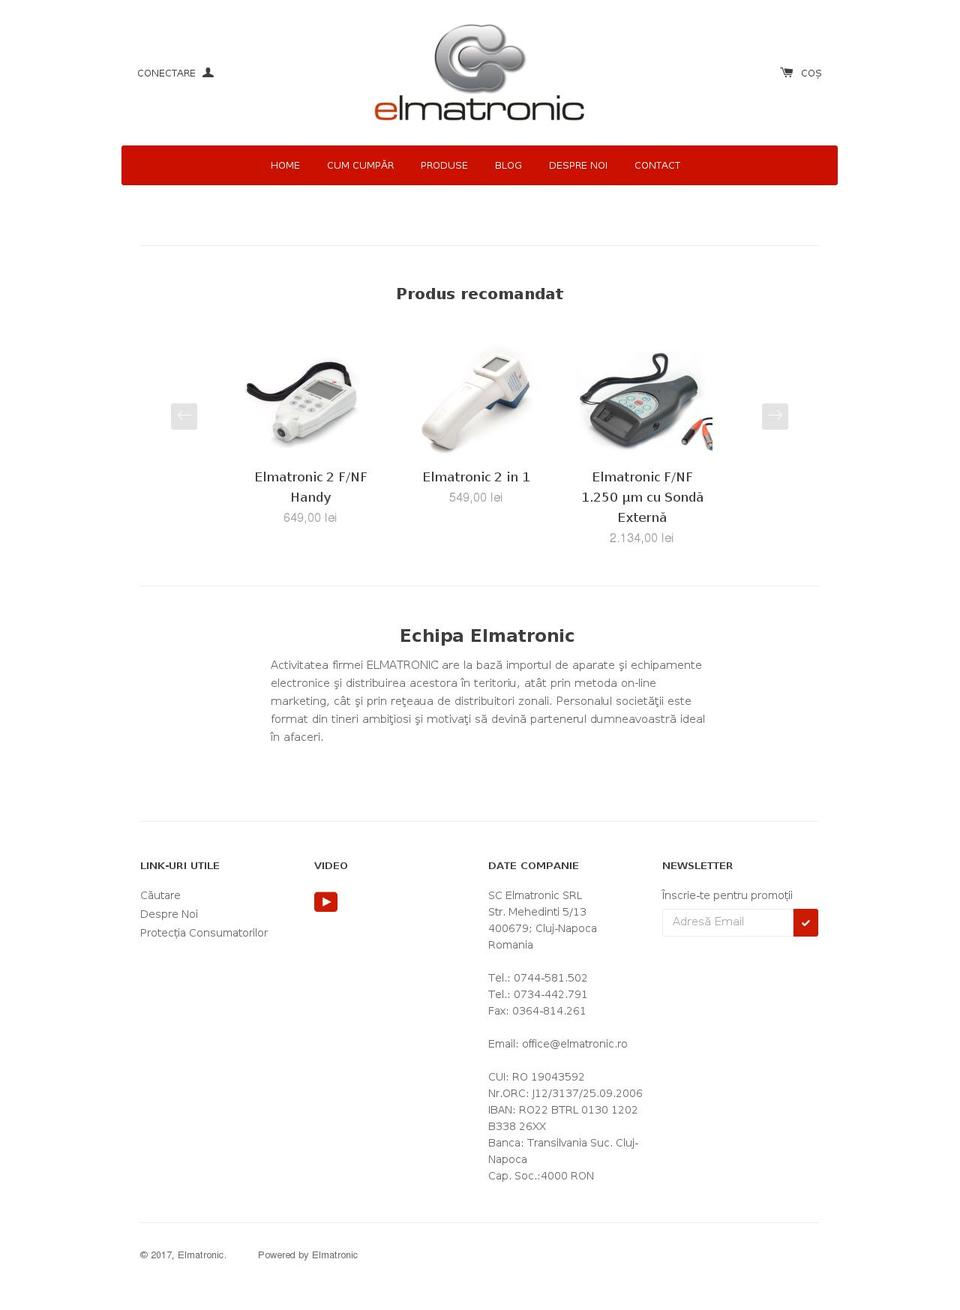 elmatronic.ro shopify website screenshot